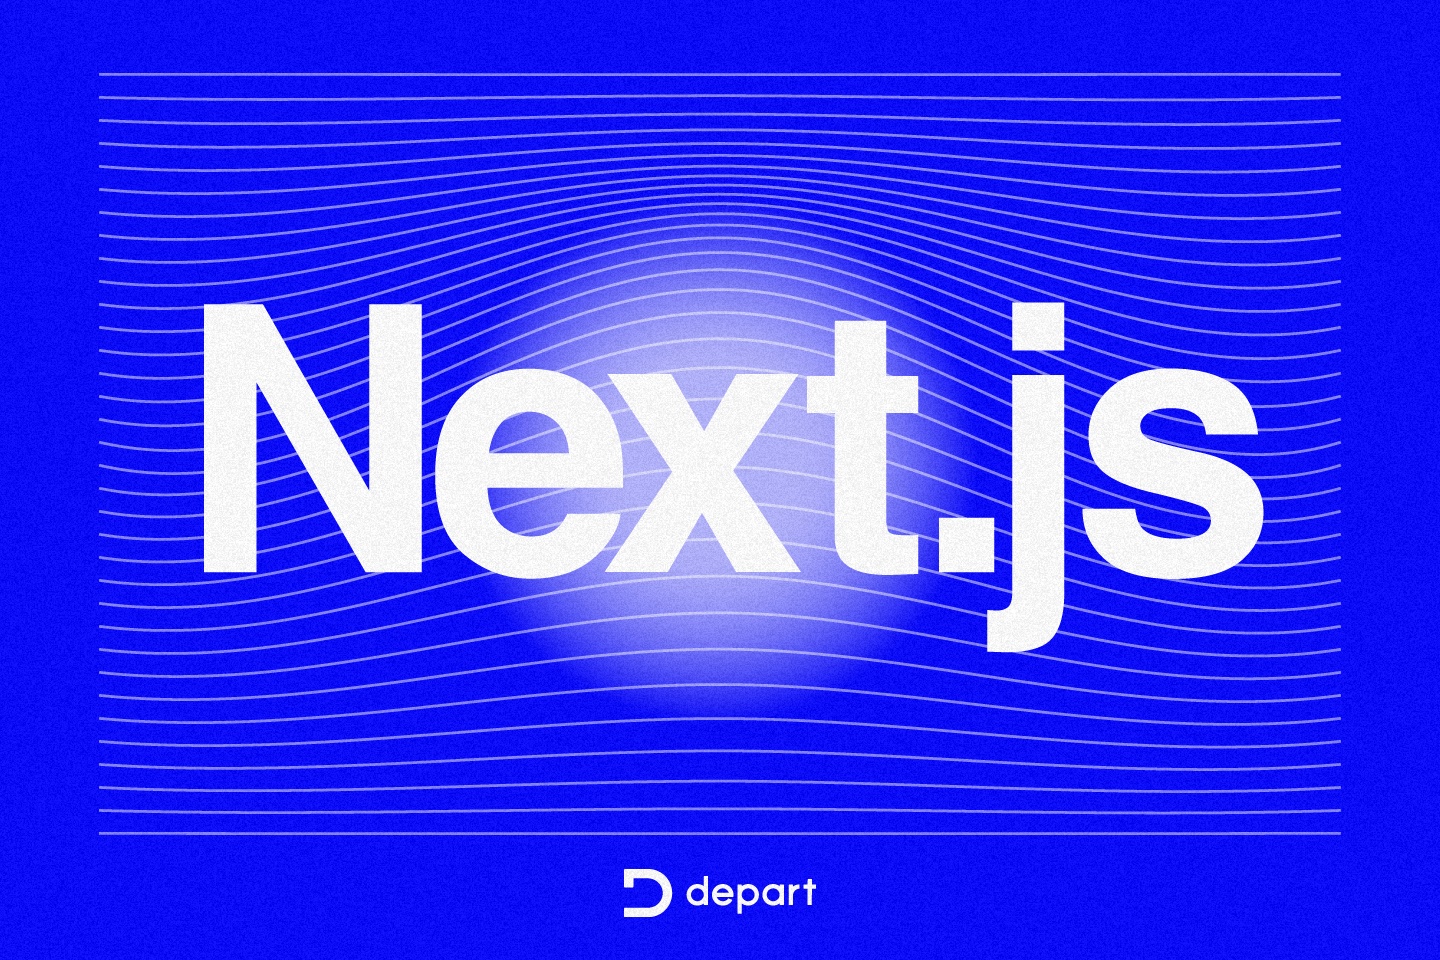 Next.jsとは？特徴やメリット・デメリットを解説します